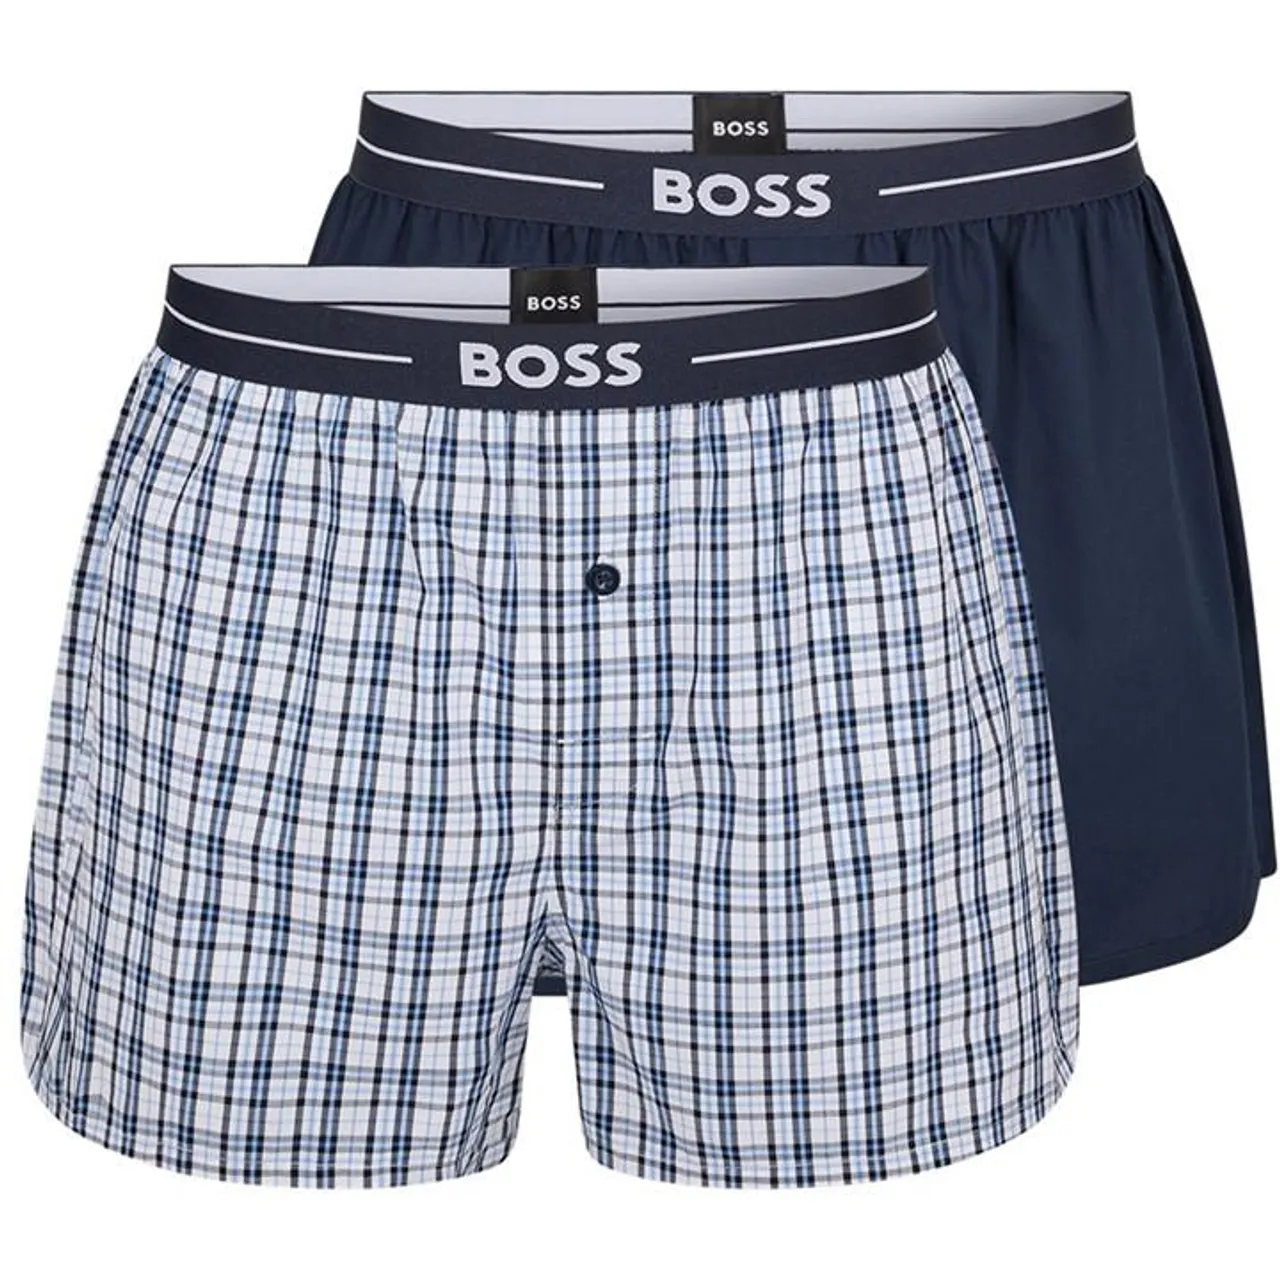 Boss 2 Pack Mens Boxers - Blue